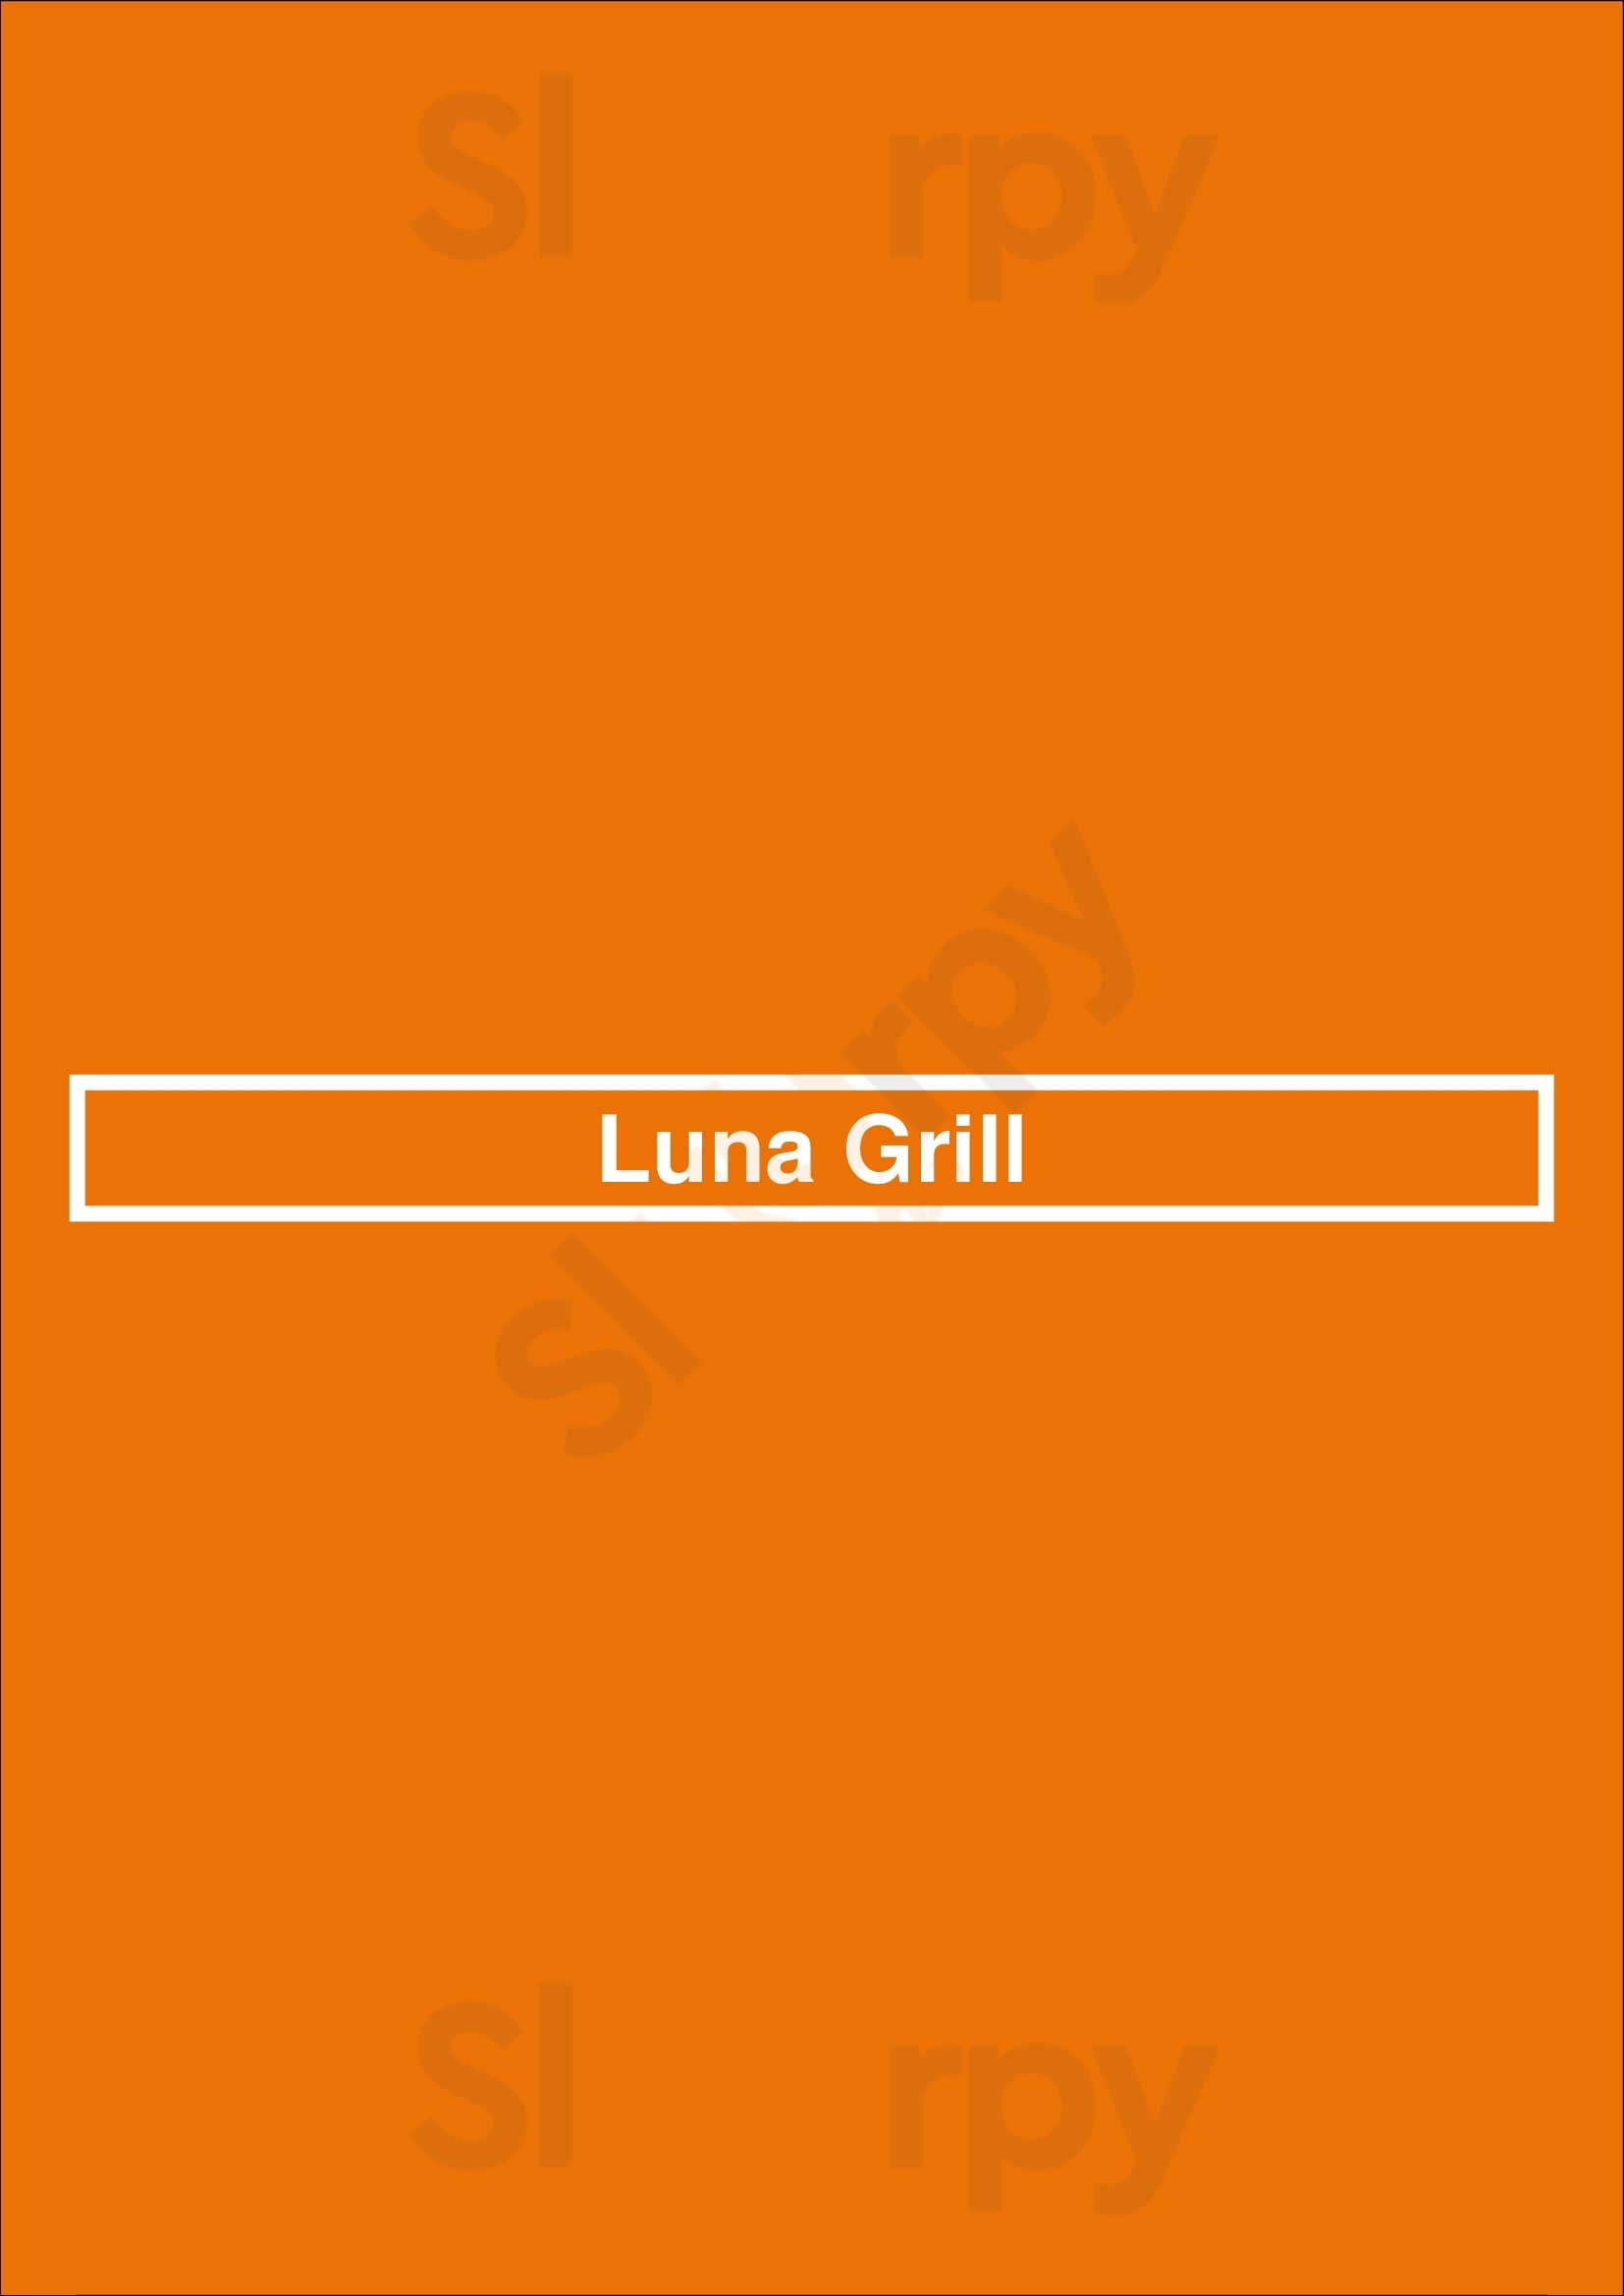 Luna Grill Hillcrest San Diego Menu - 1